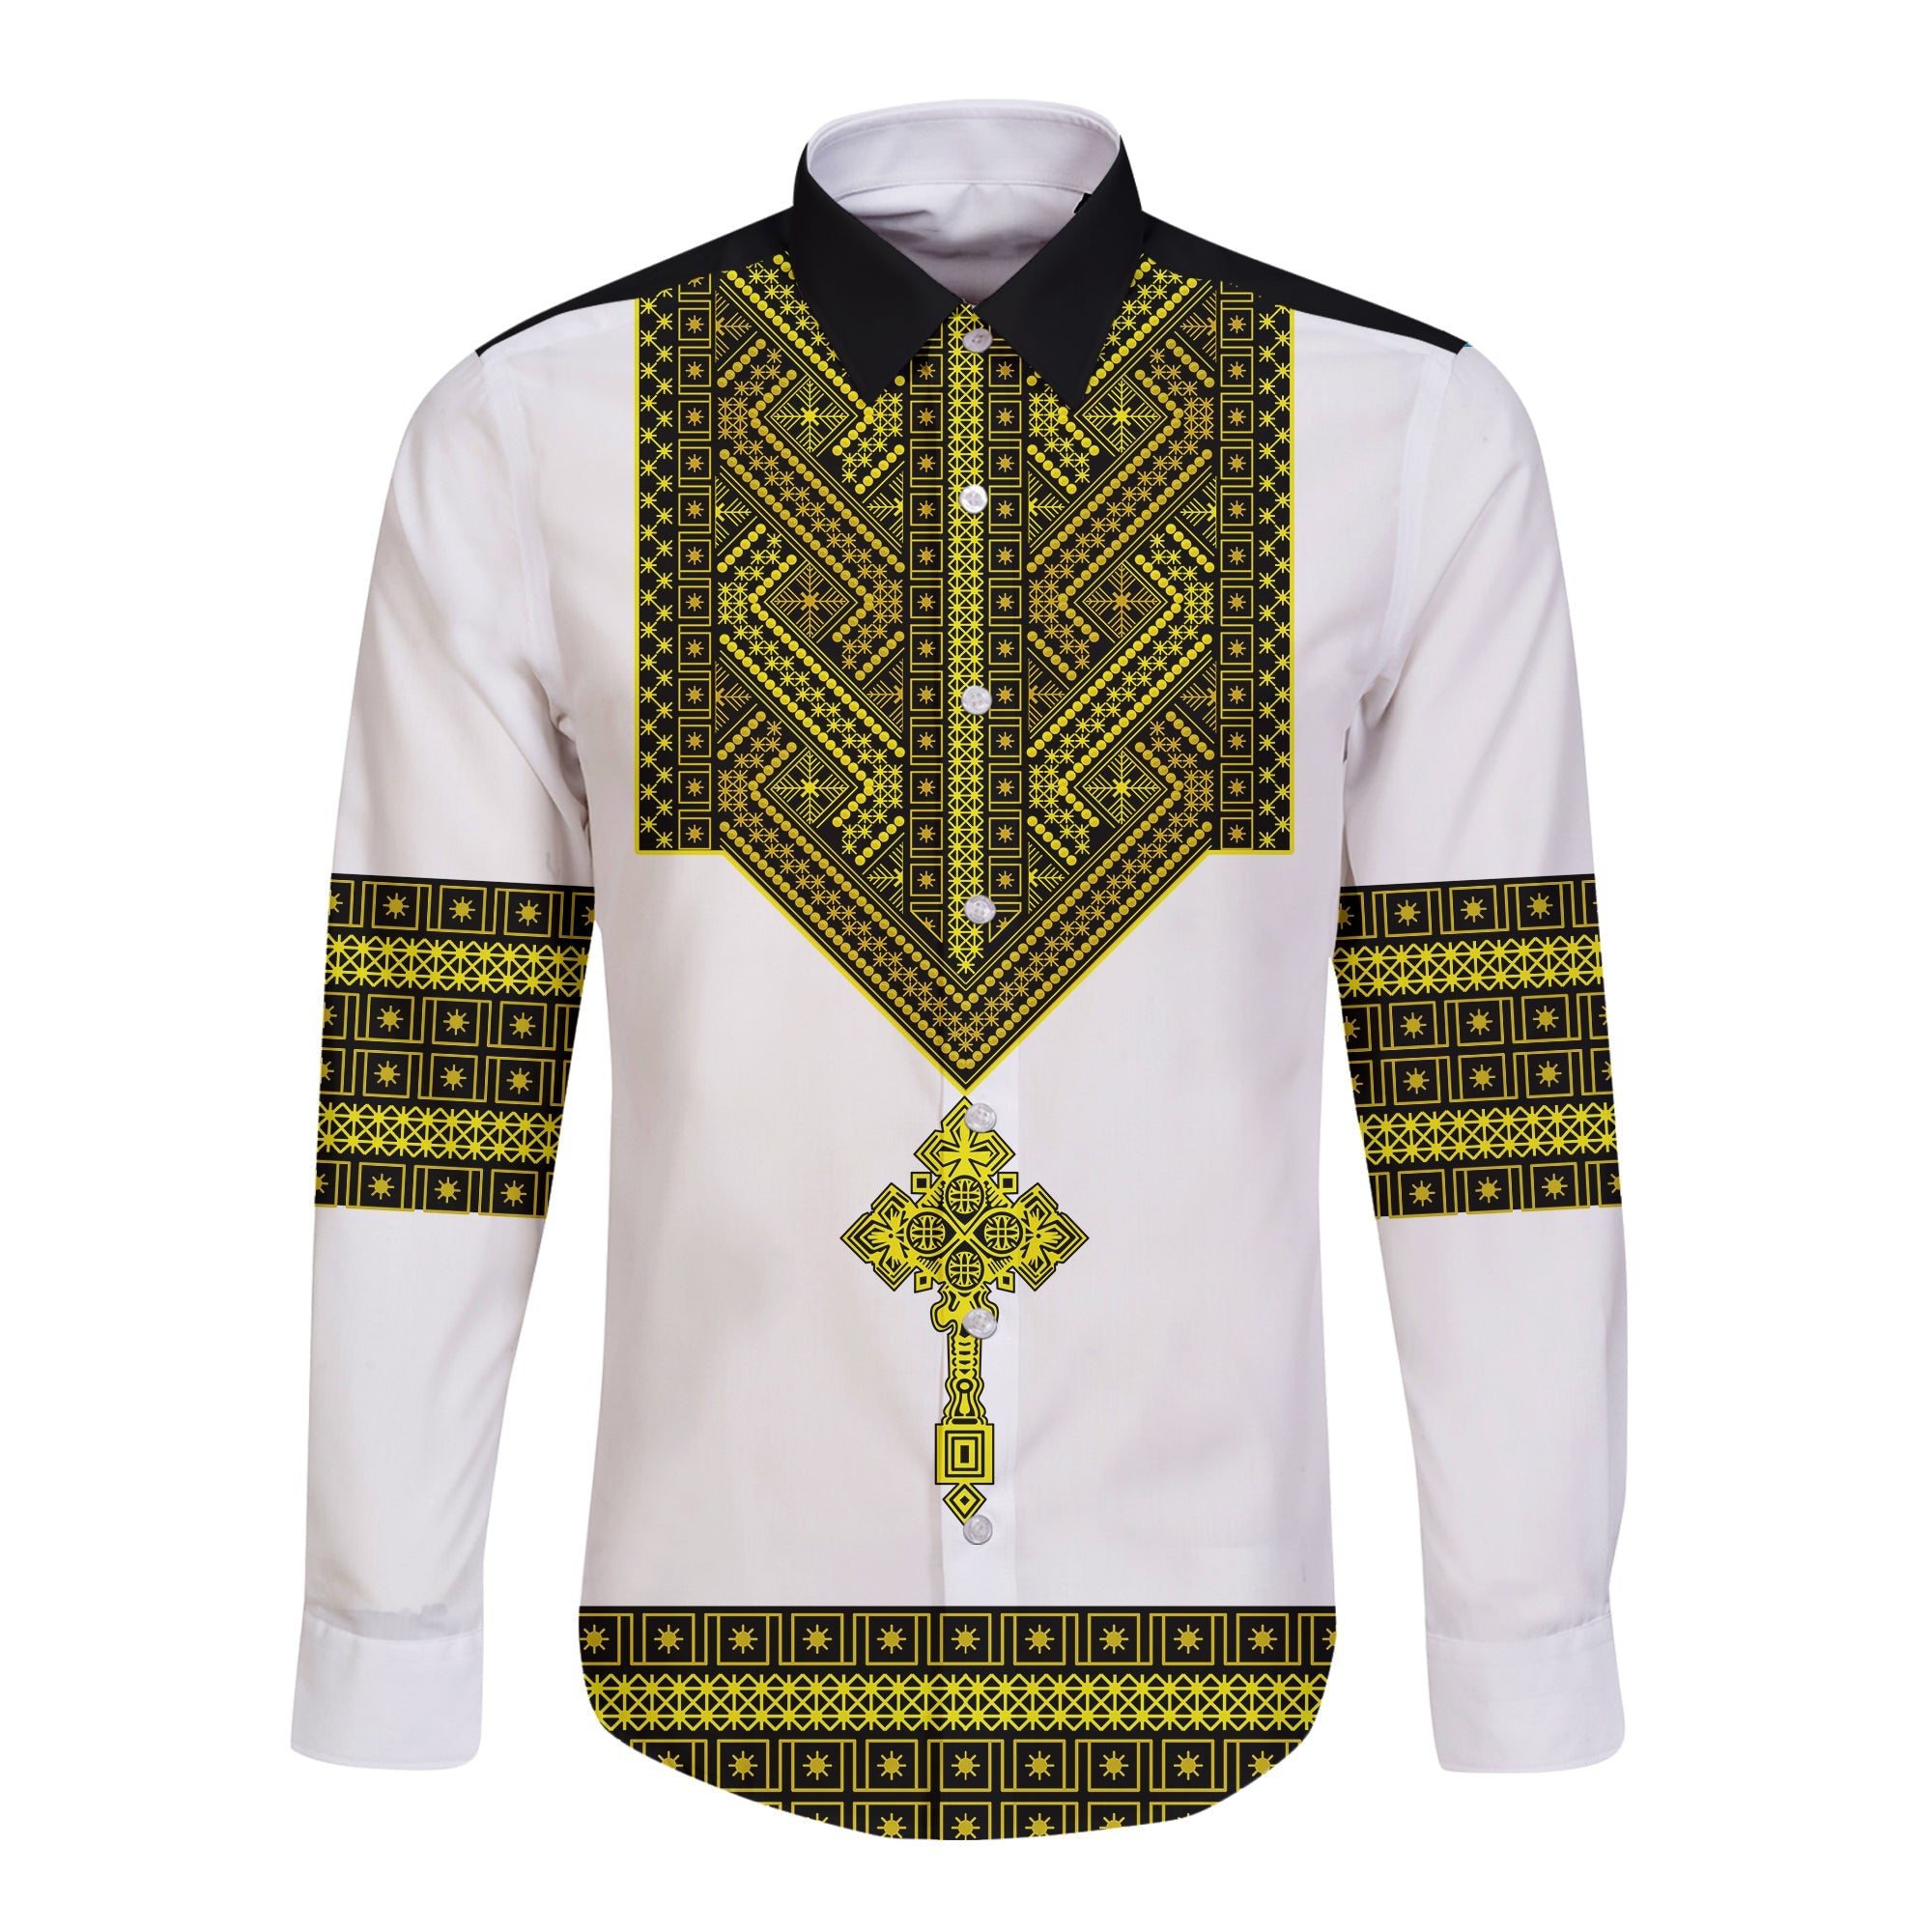 ethiopia-tibeb-hawaii-long-sleeve-button-shirt-royal-ethiopian-cross